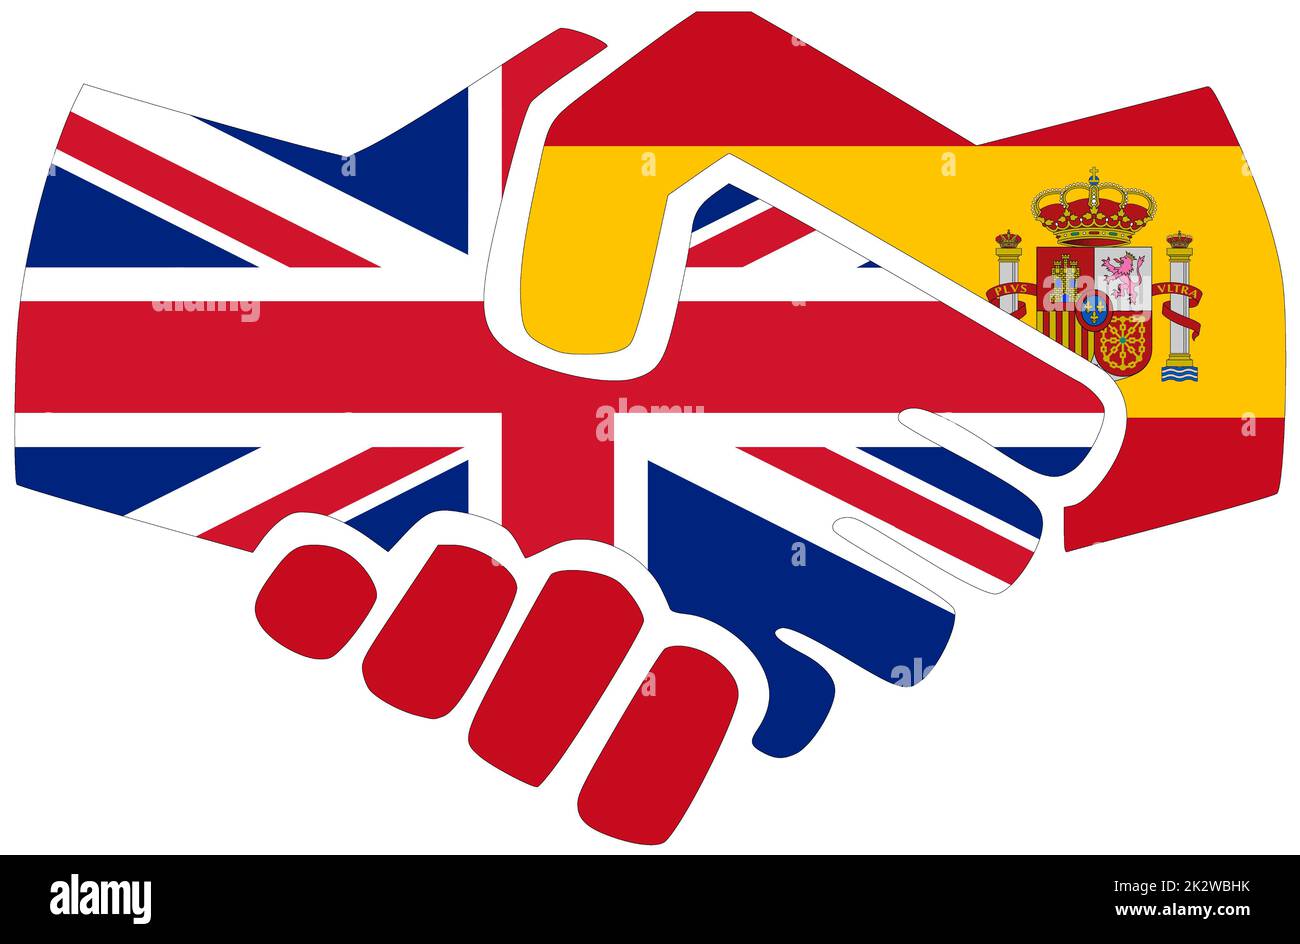 UK - Spain : Handshake, symbol of agreement or friendship Stock Photo